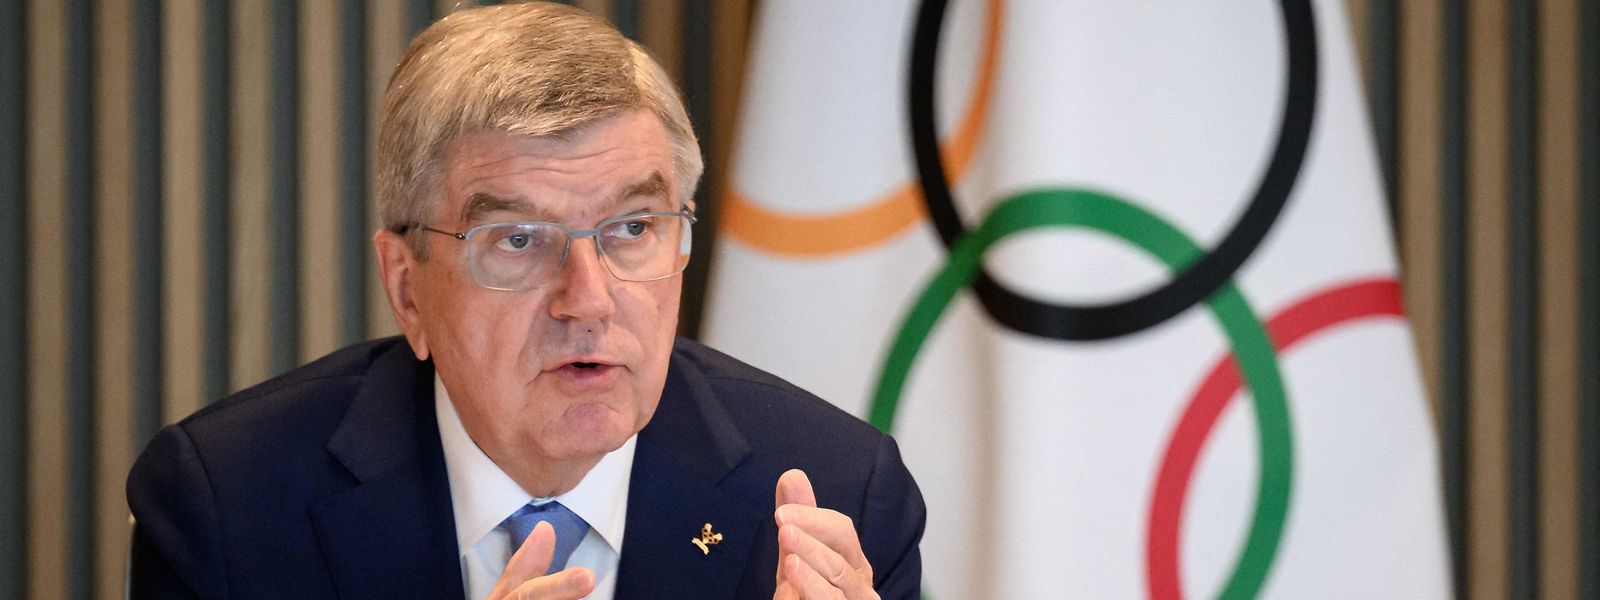 Thomas Bach rechtfertigt sich mehr schlecht als recht für den Schritt des IOC.